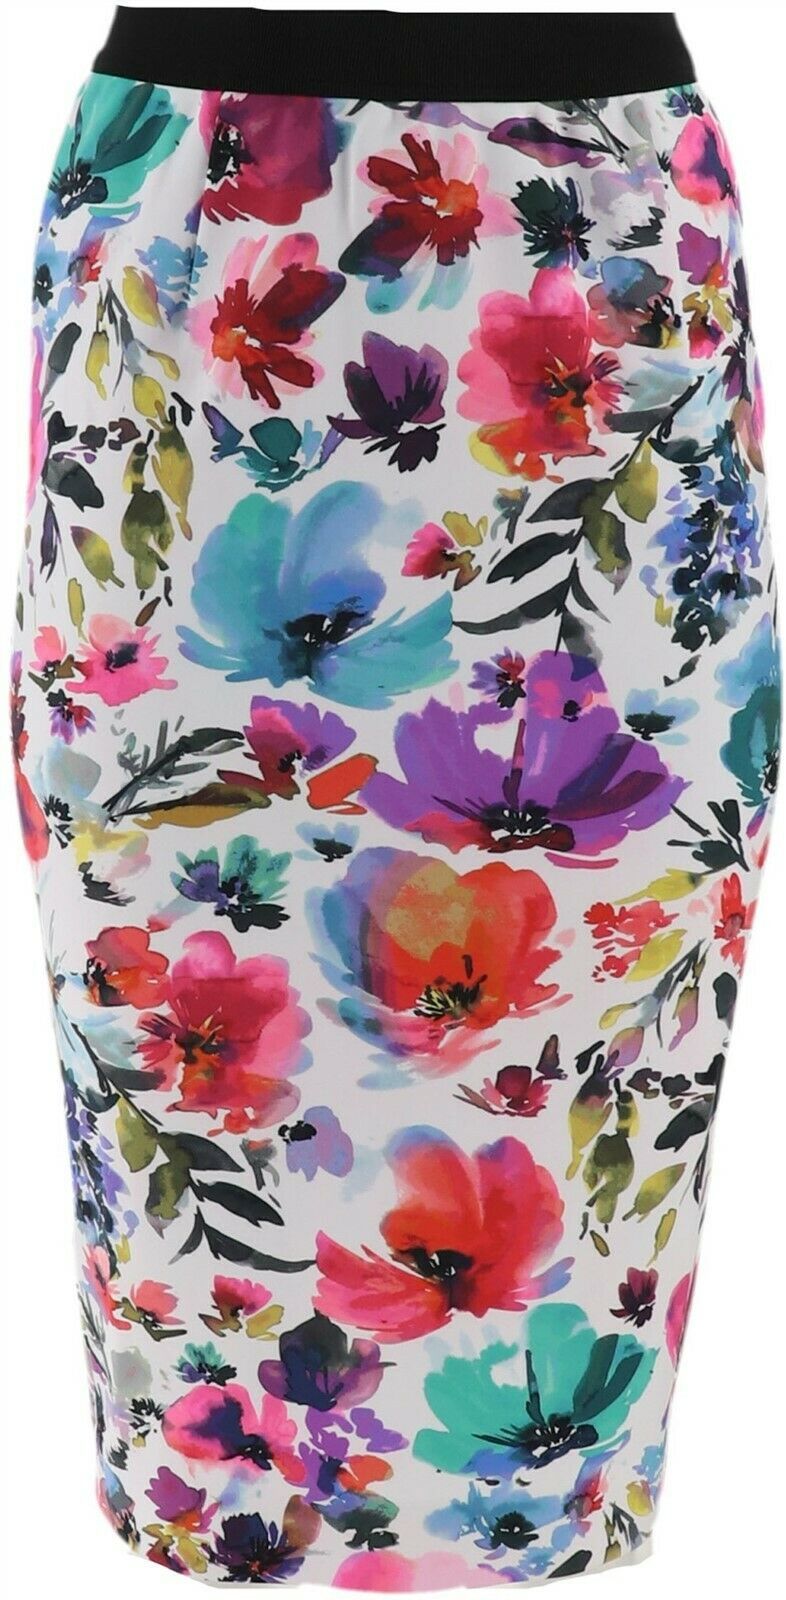 GILI Printed Floral Scuba Knit Pencil Skirt Multi 0 NEW A274386